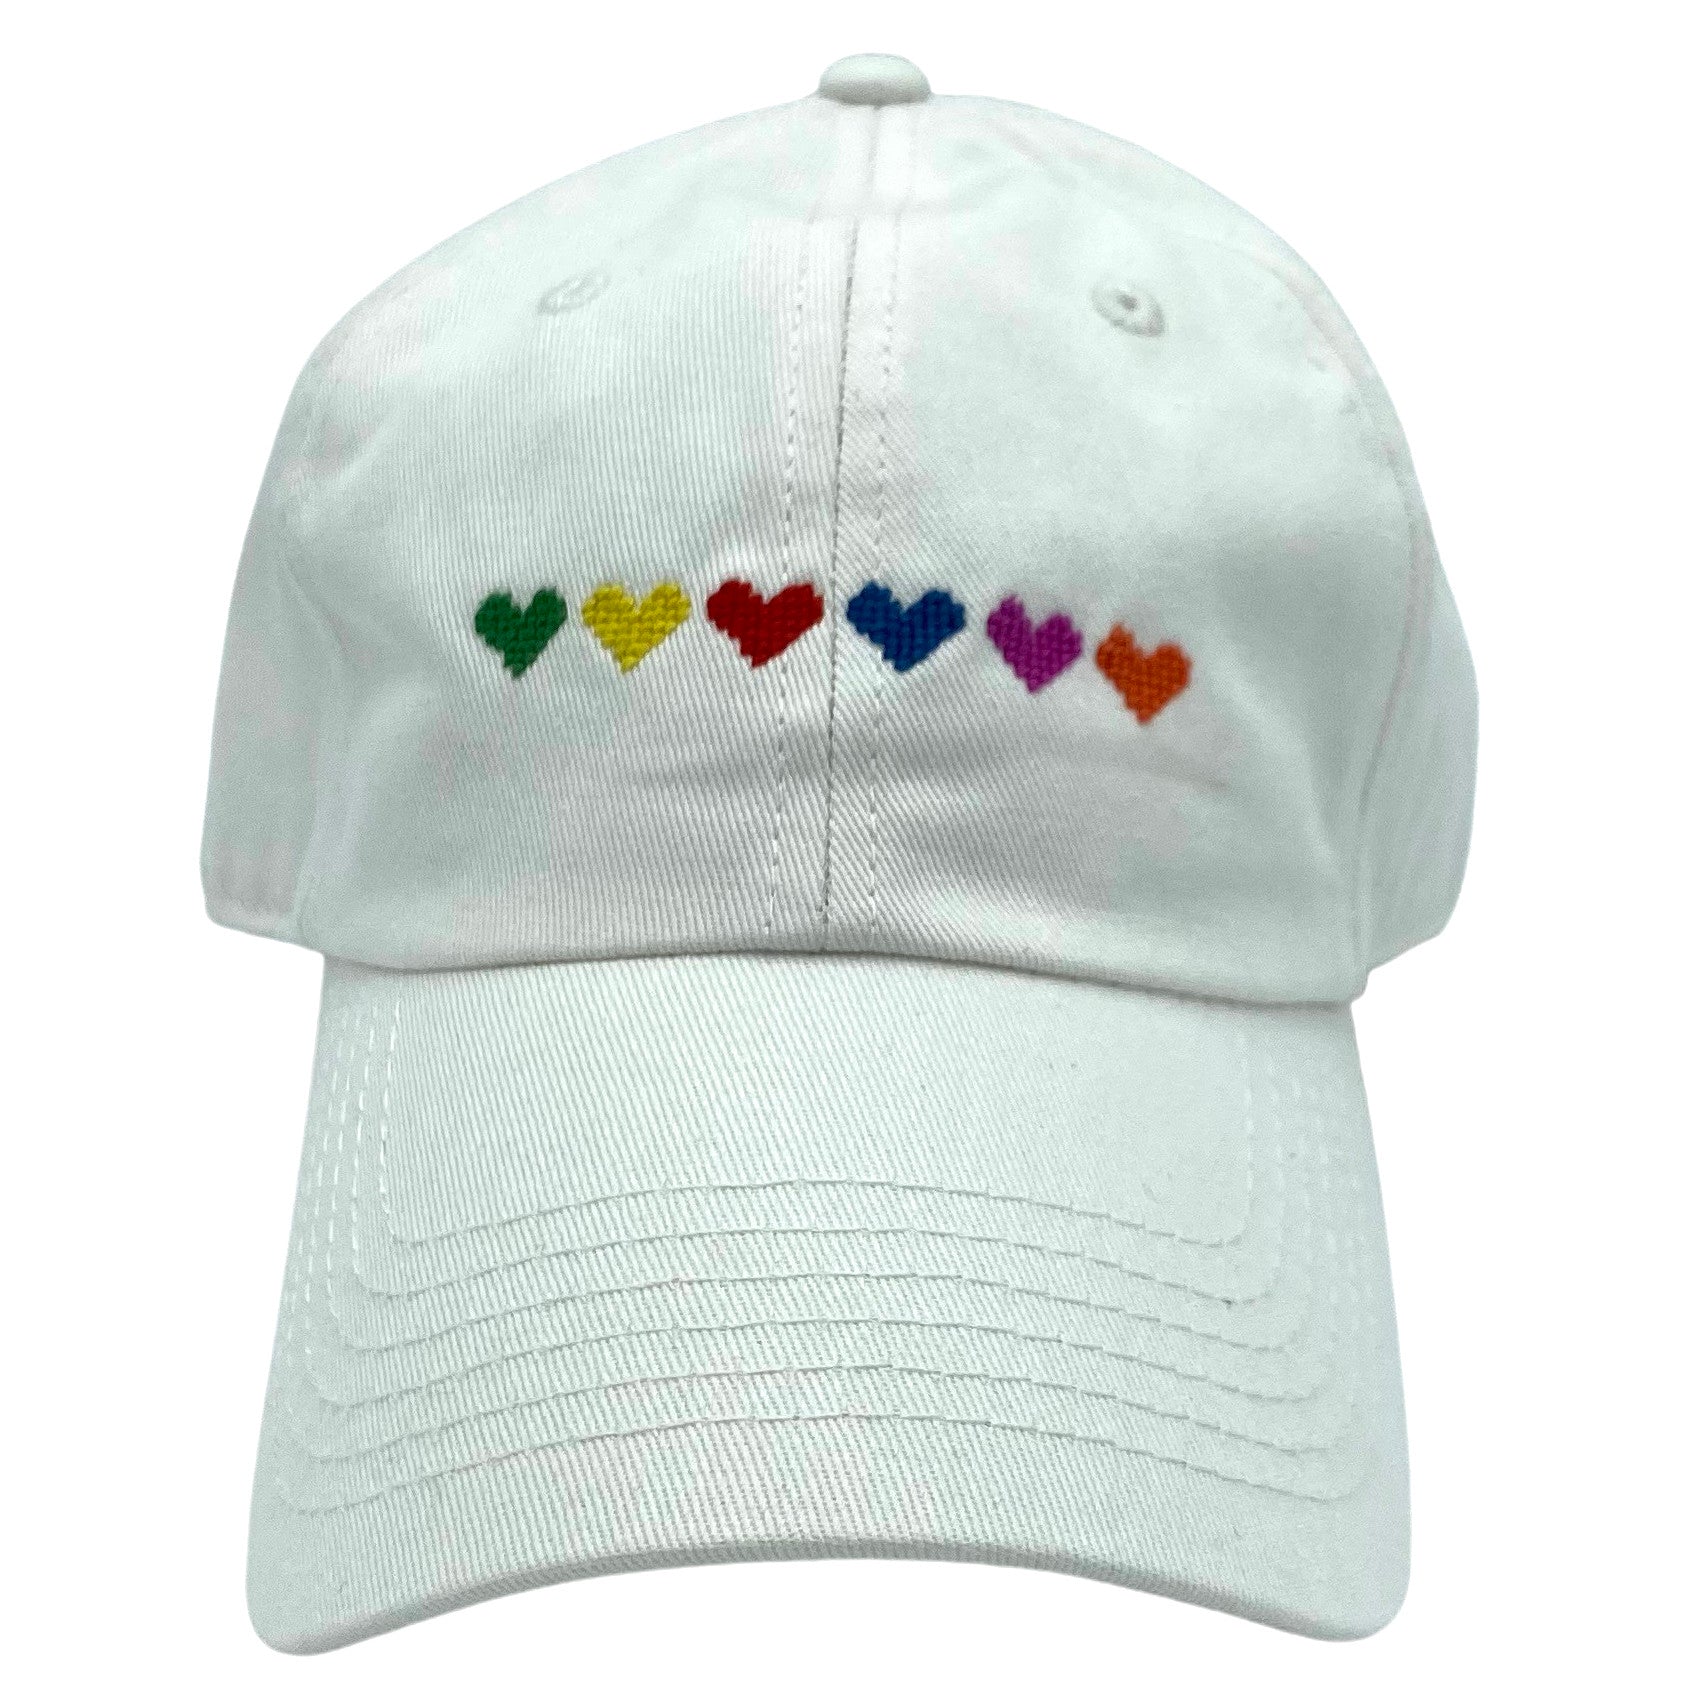 rainbow hearts on snow white hat